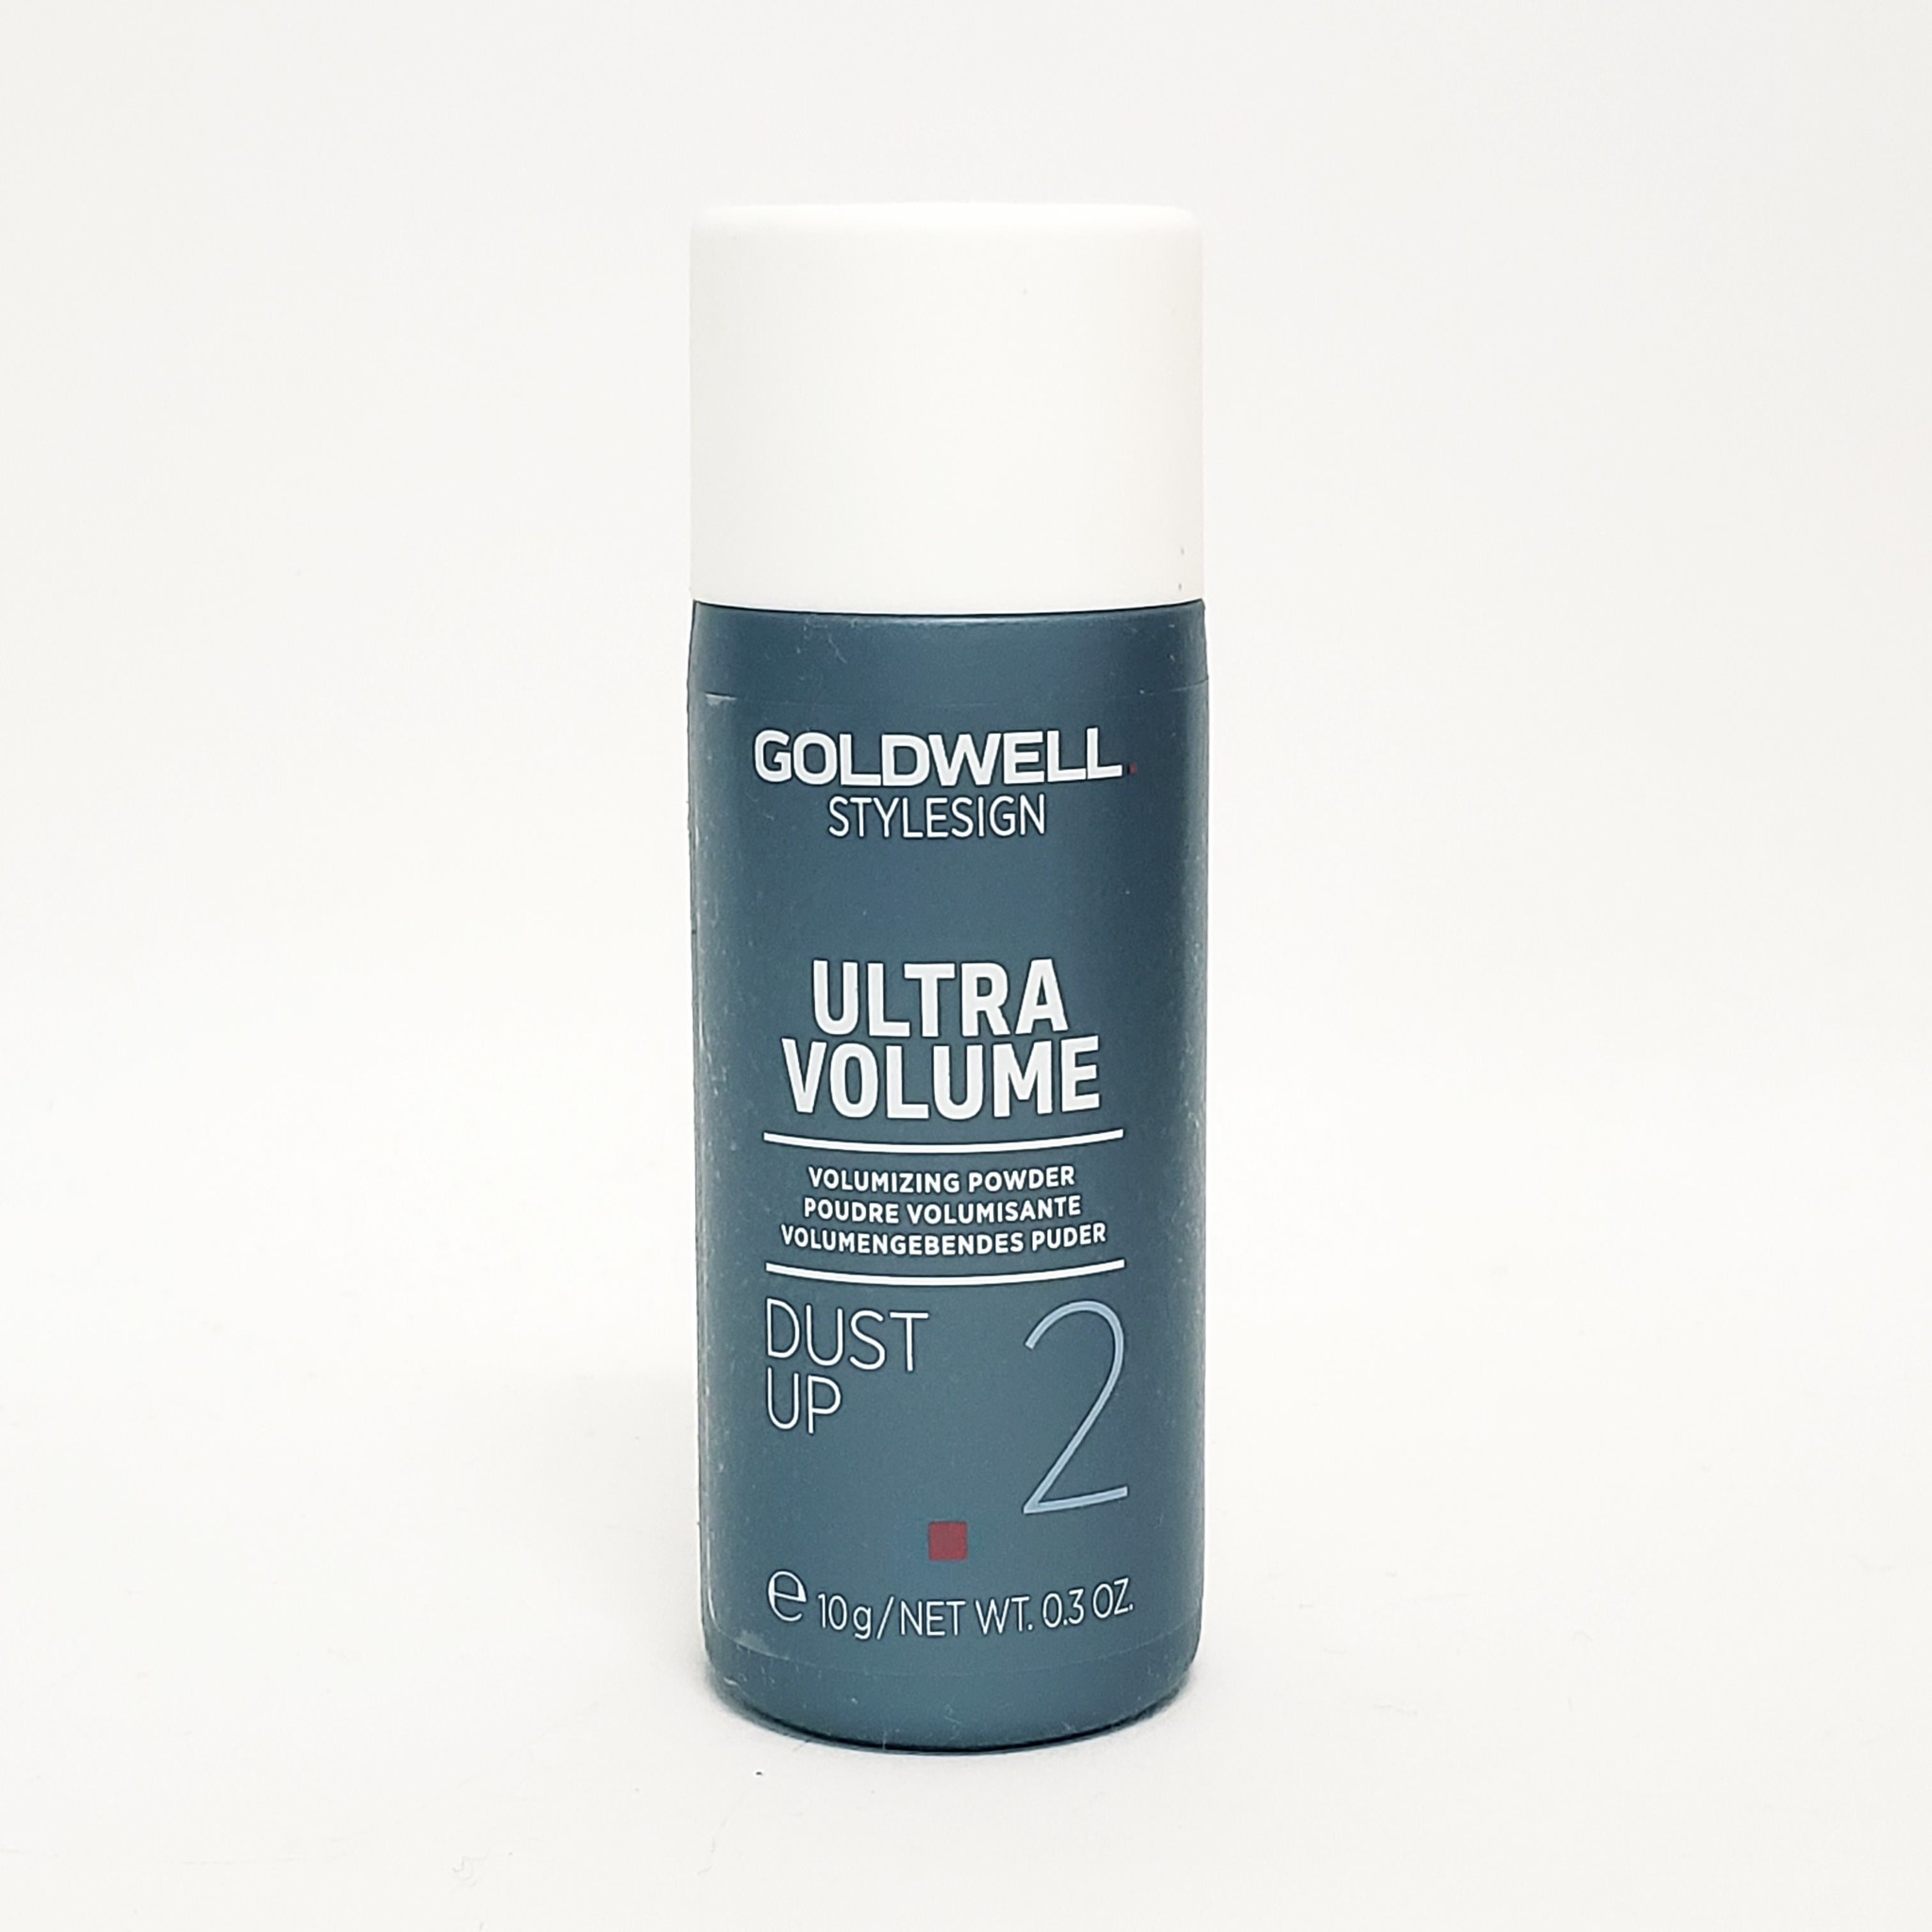 Goldwell - Stylesign Ultra Volume Dust Up Volumizing Powder - Powder For More Hair Volume